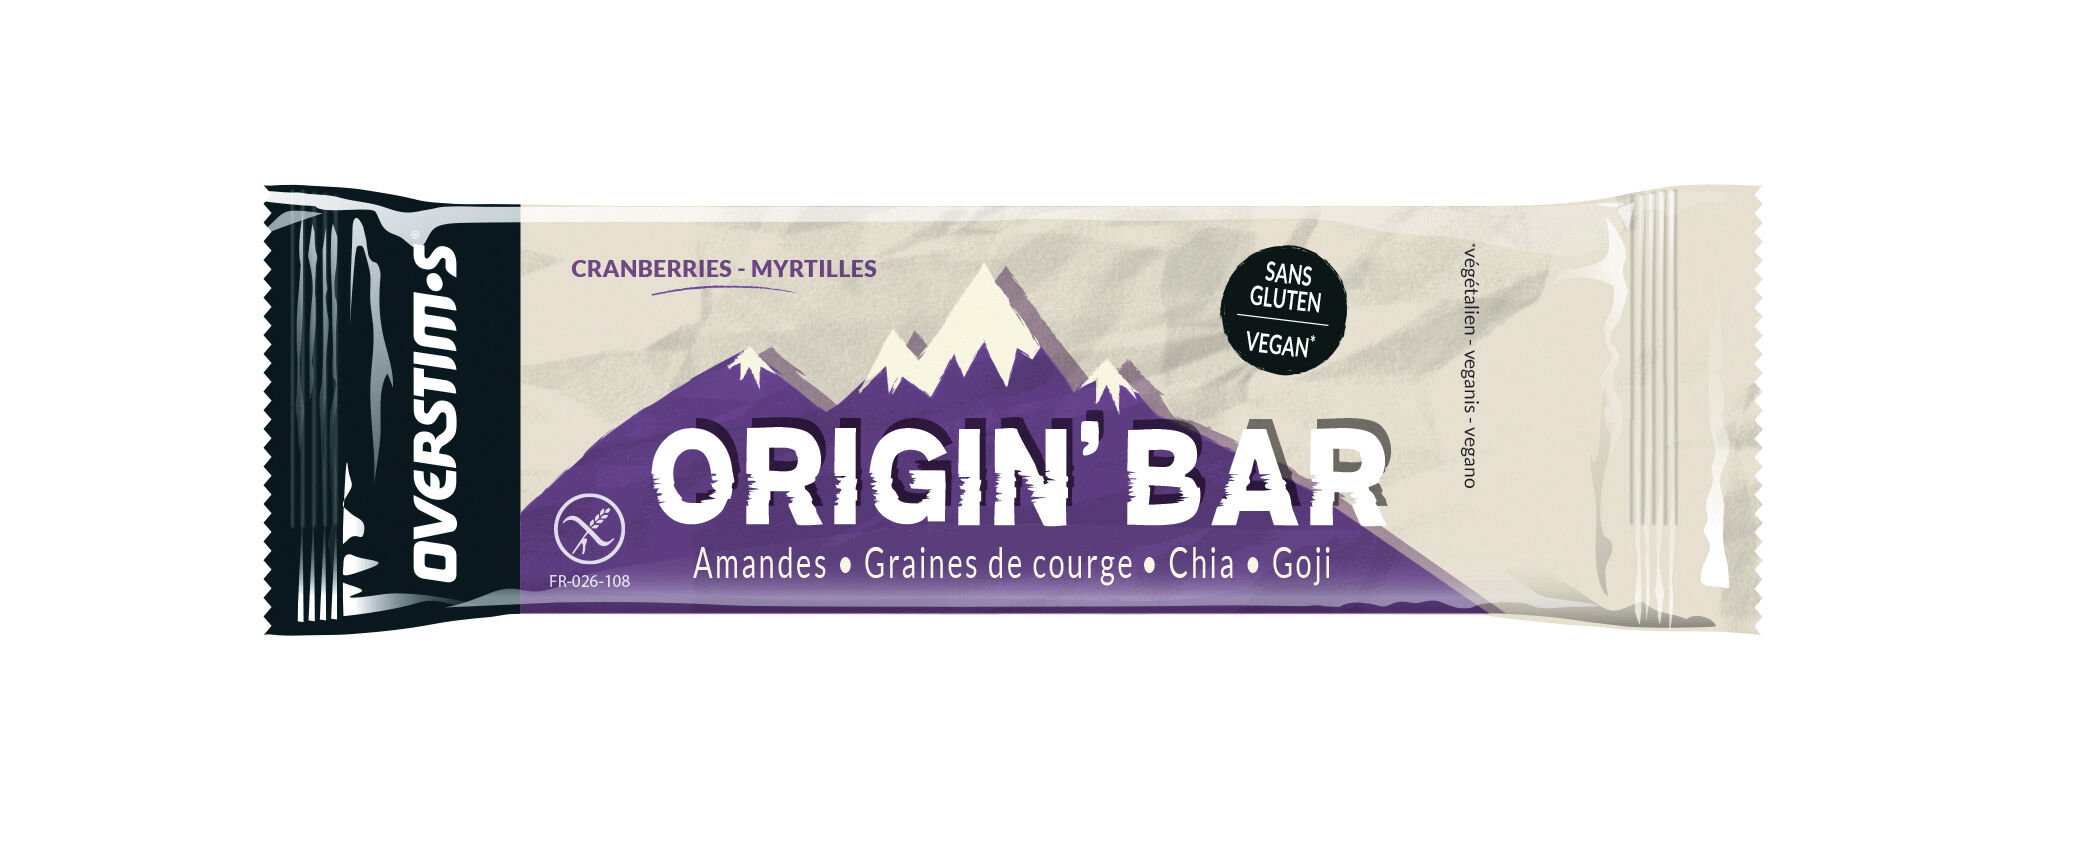 Overstim.s Origin Bar Vegan - Energy bars